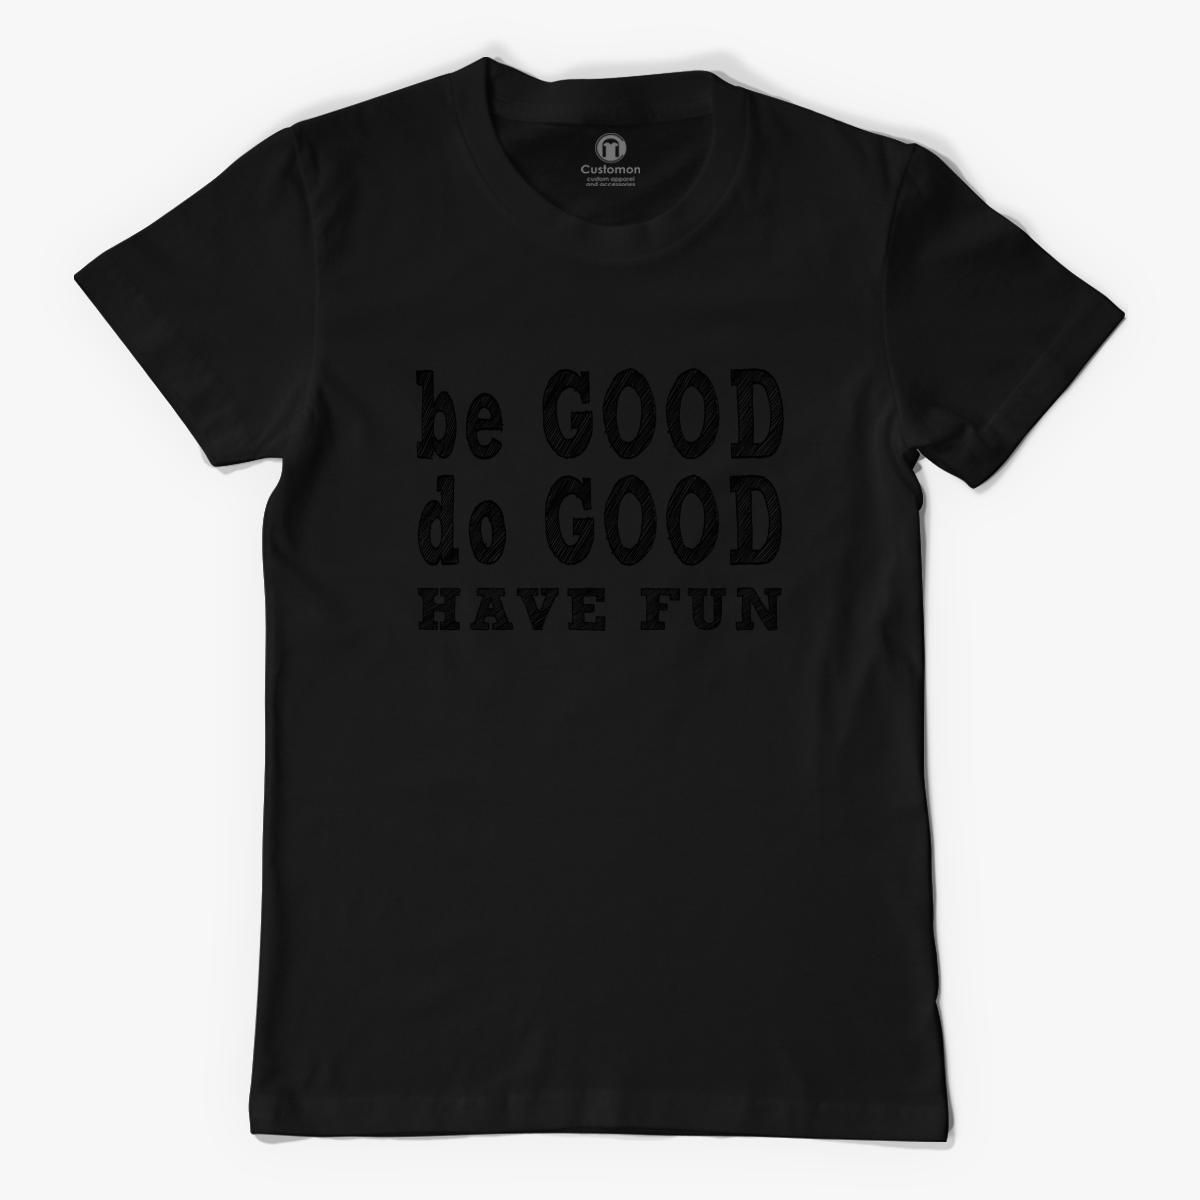 BE-GOOD-DO-GOOD-HAVE Men's T-shirt - Customon